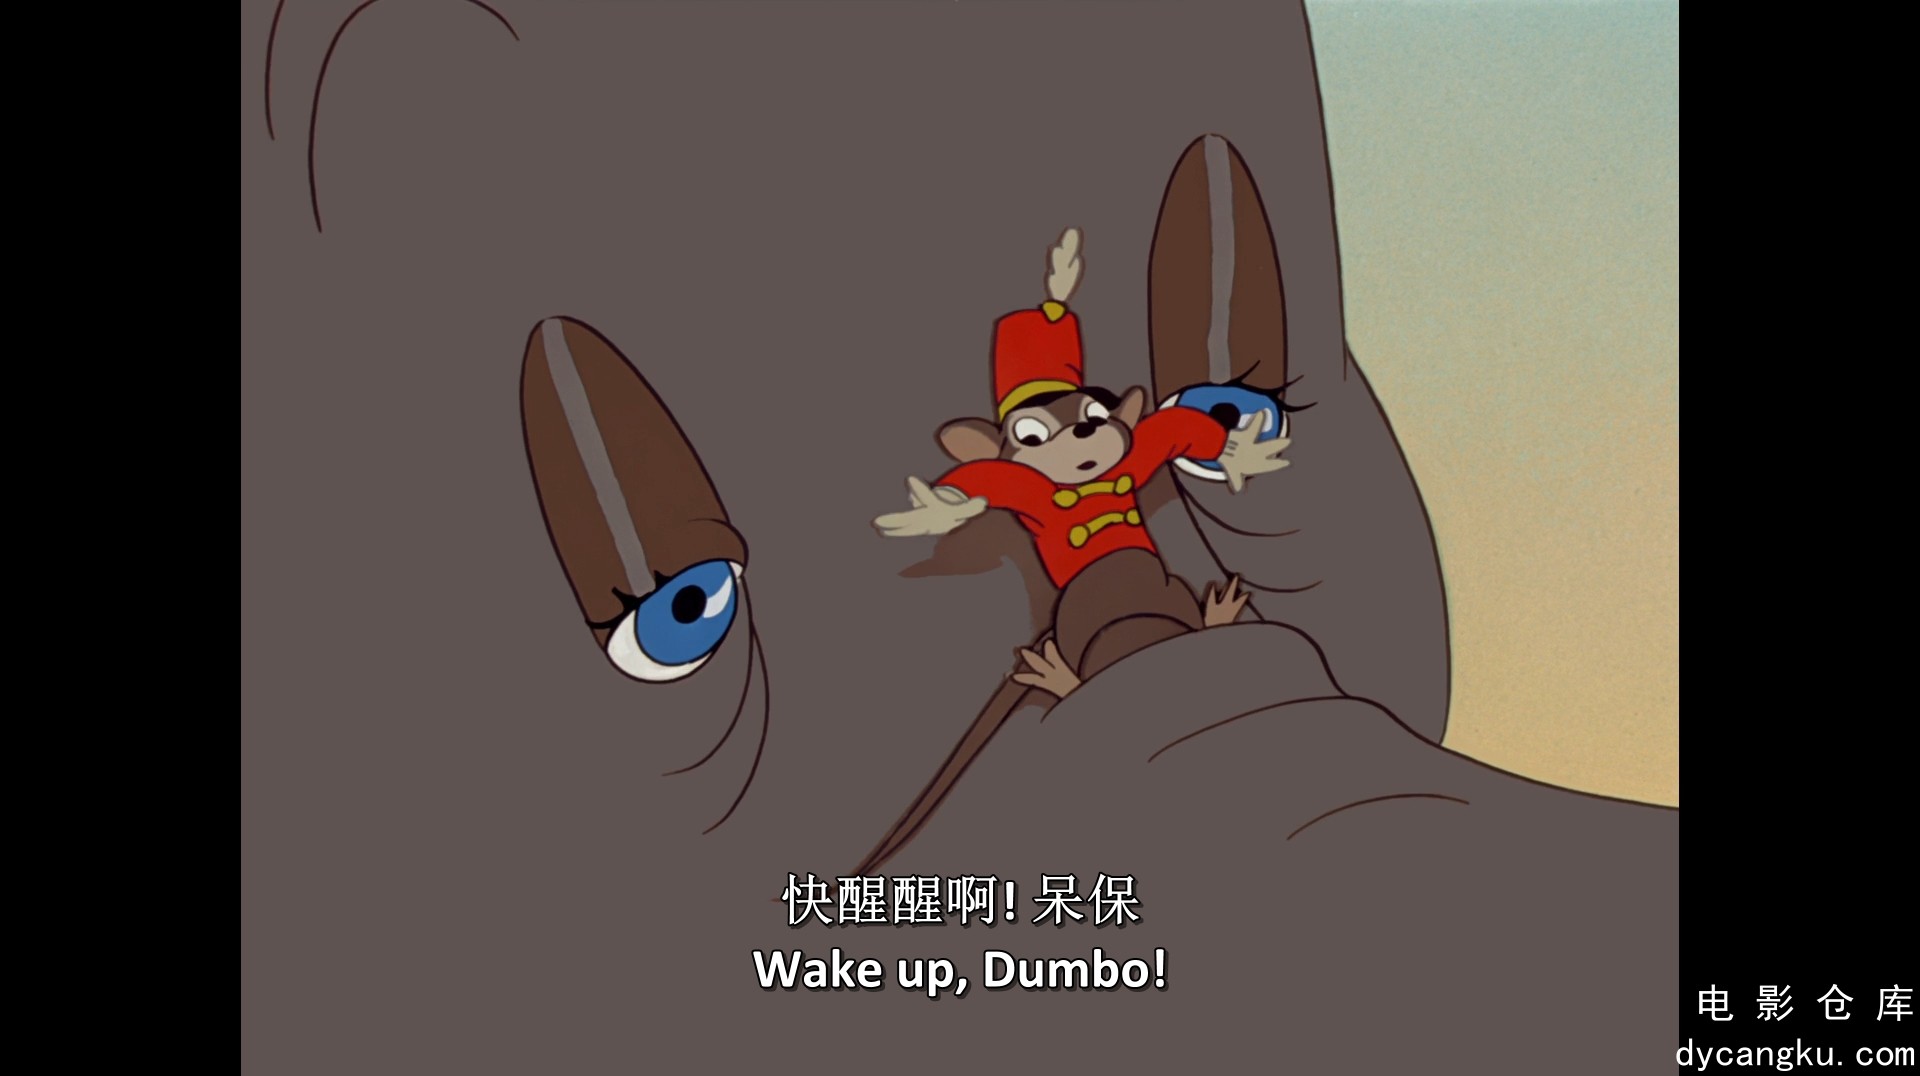 [电影仓库dycangku.com]Dumbo.1941.1080p.BluRay.DTS.x264-RUXi.mkv_snapshot_00.53.07.487.jpg